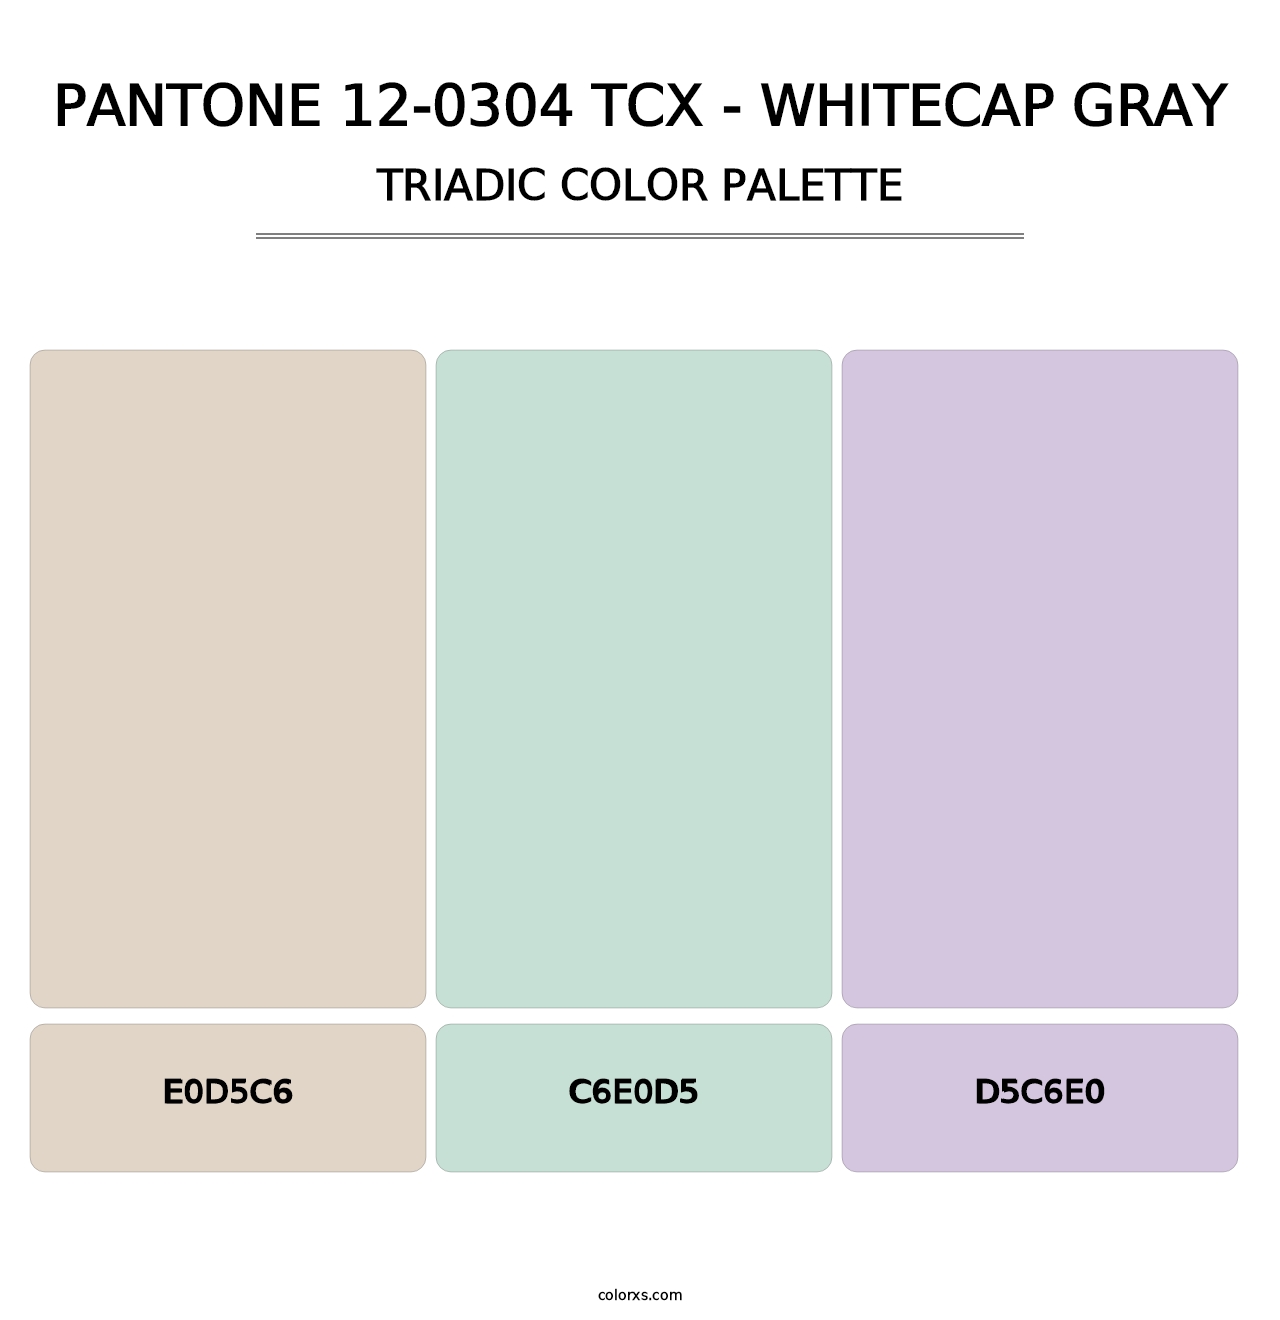 PANTONE 12-0304 TCX - Whitecap Gray - Triadic Color Palette